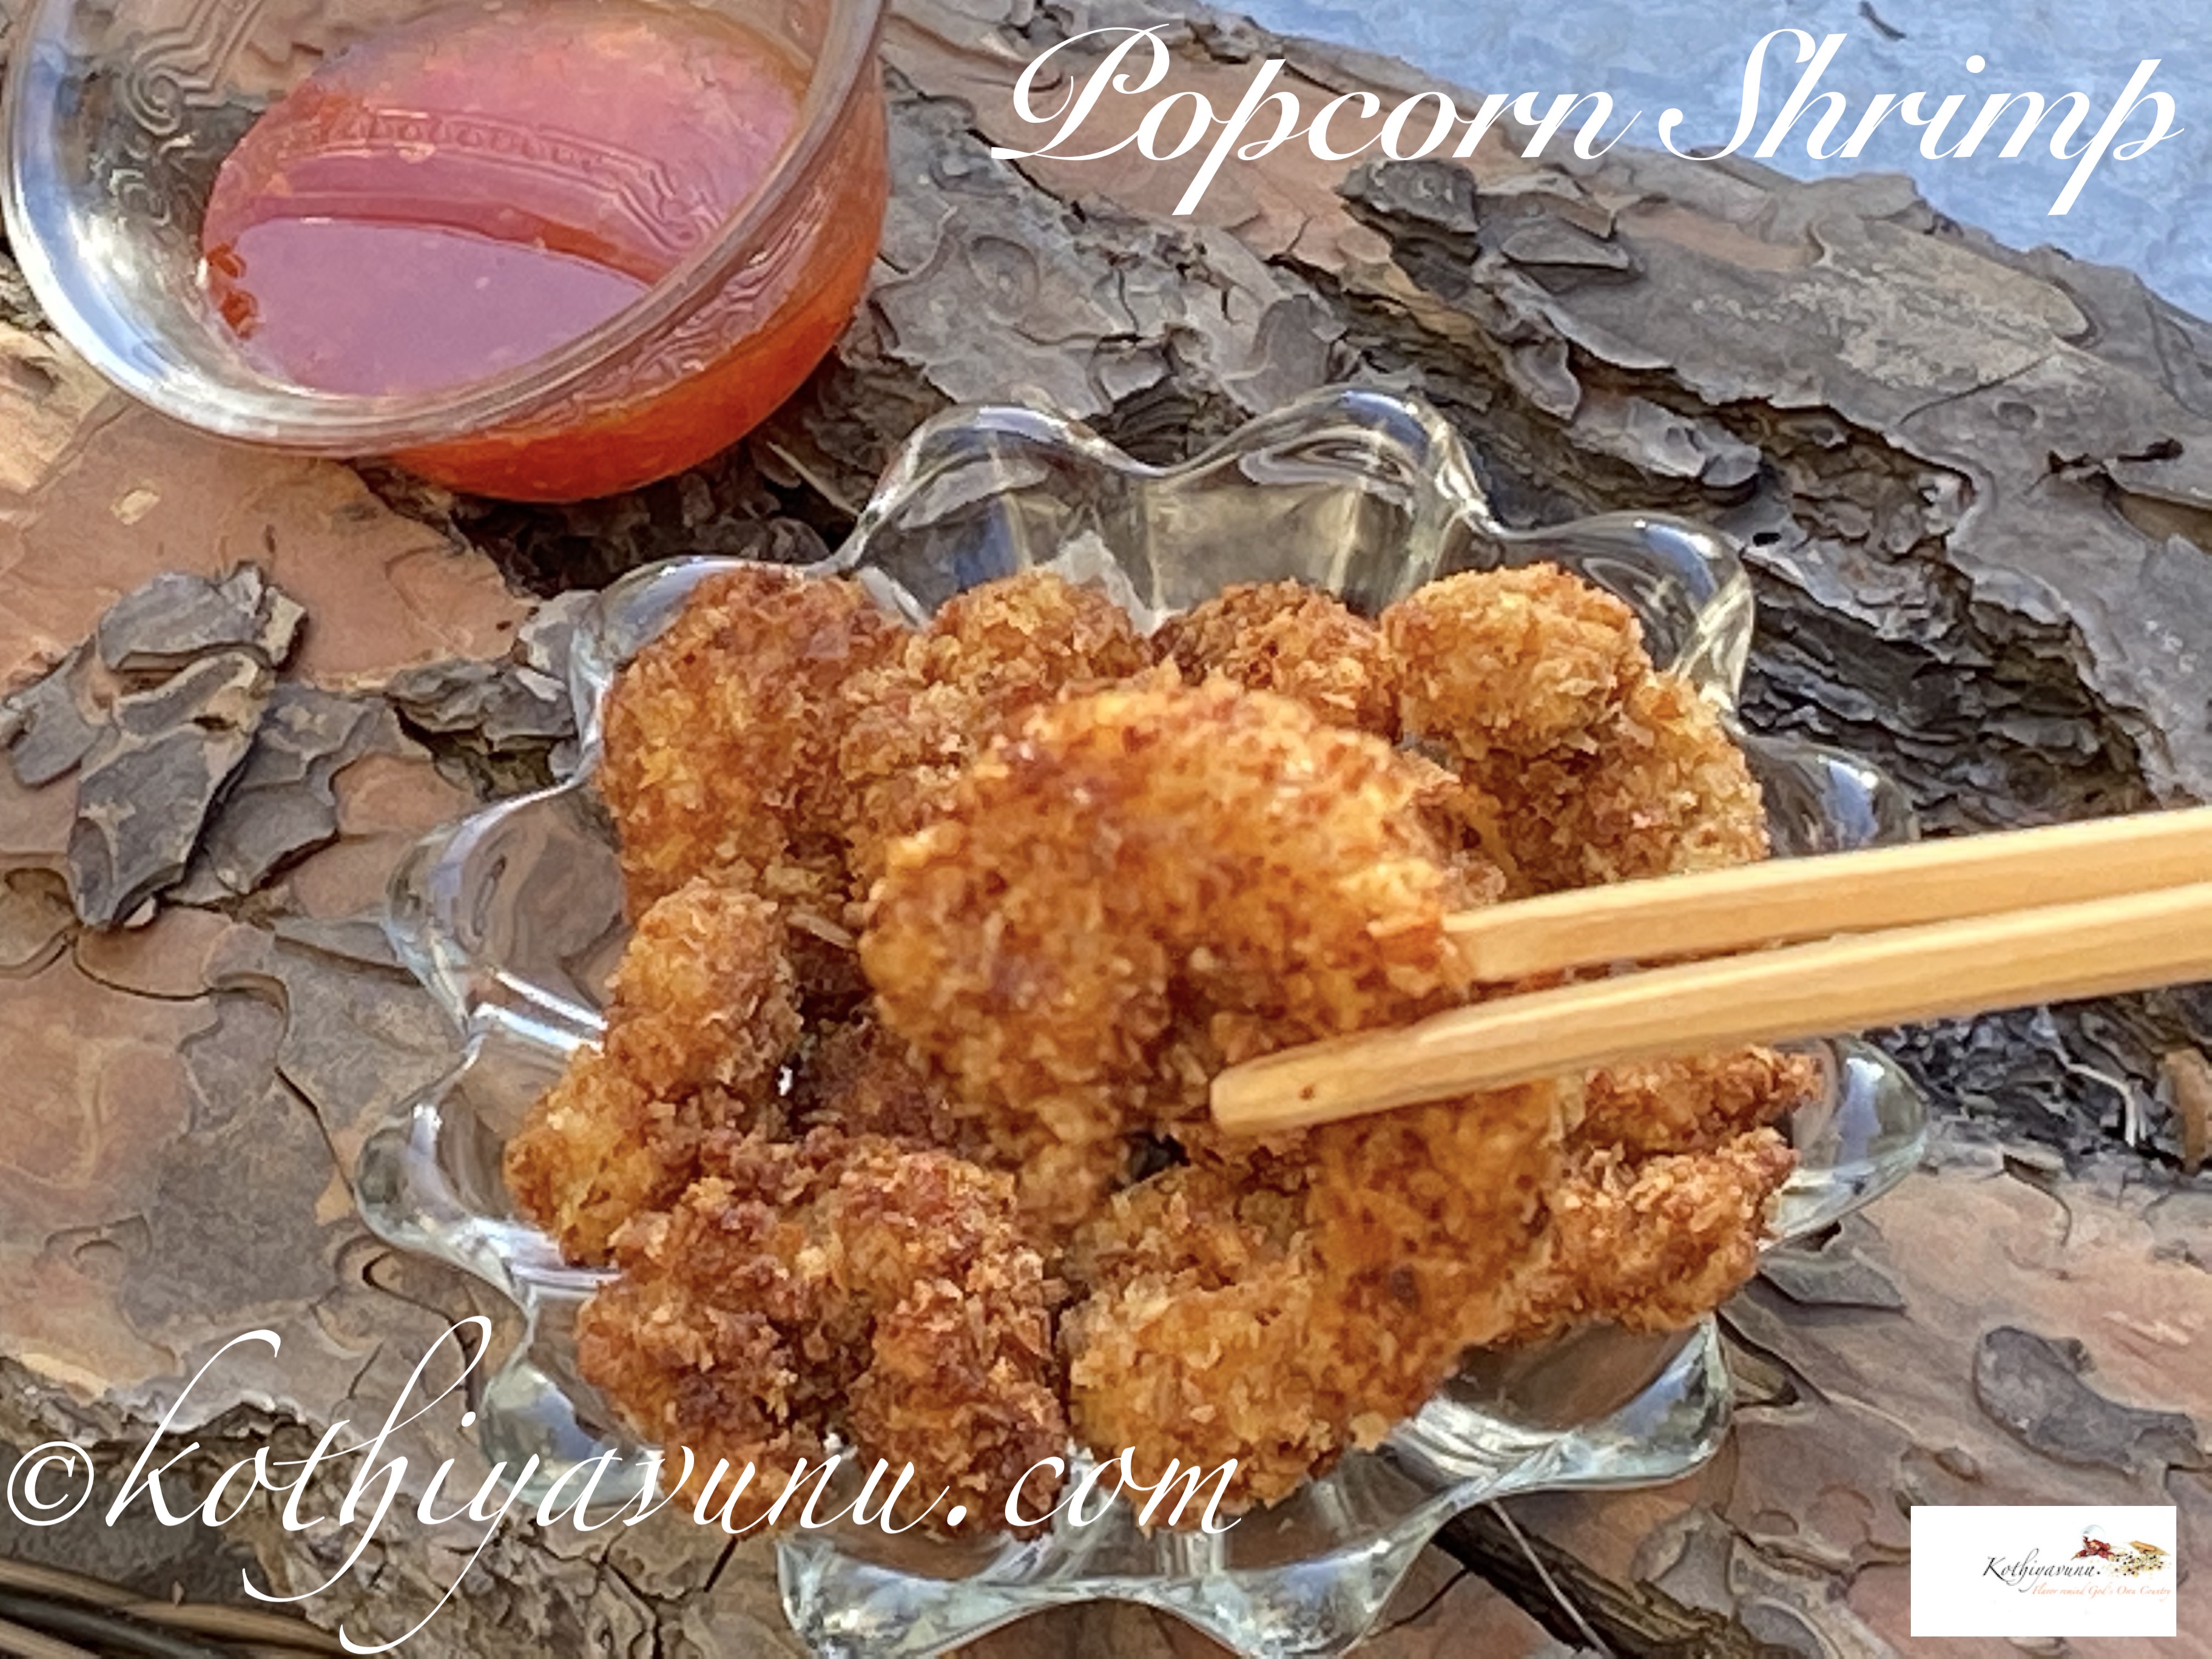 Popcorn Shrimp-Prawns Popcorn Recipe with Video.